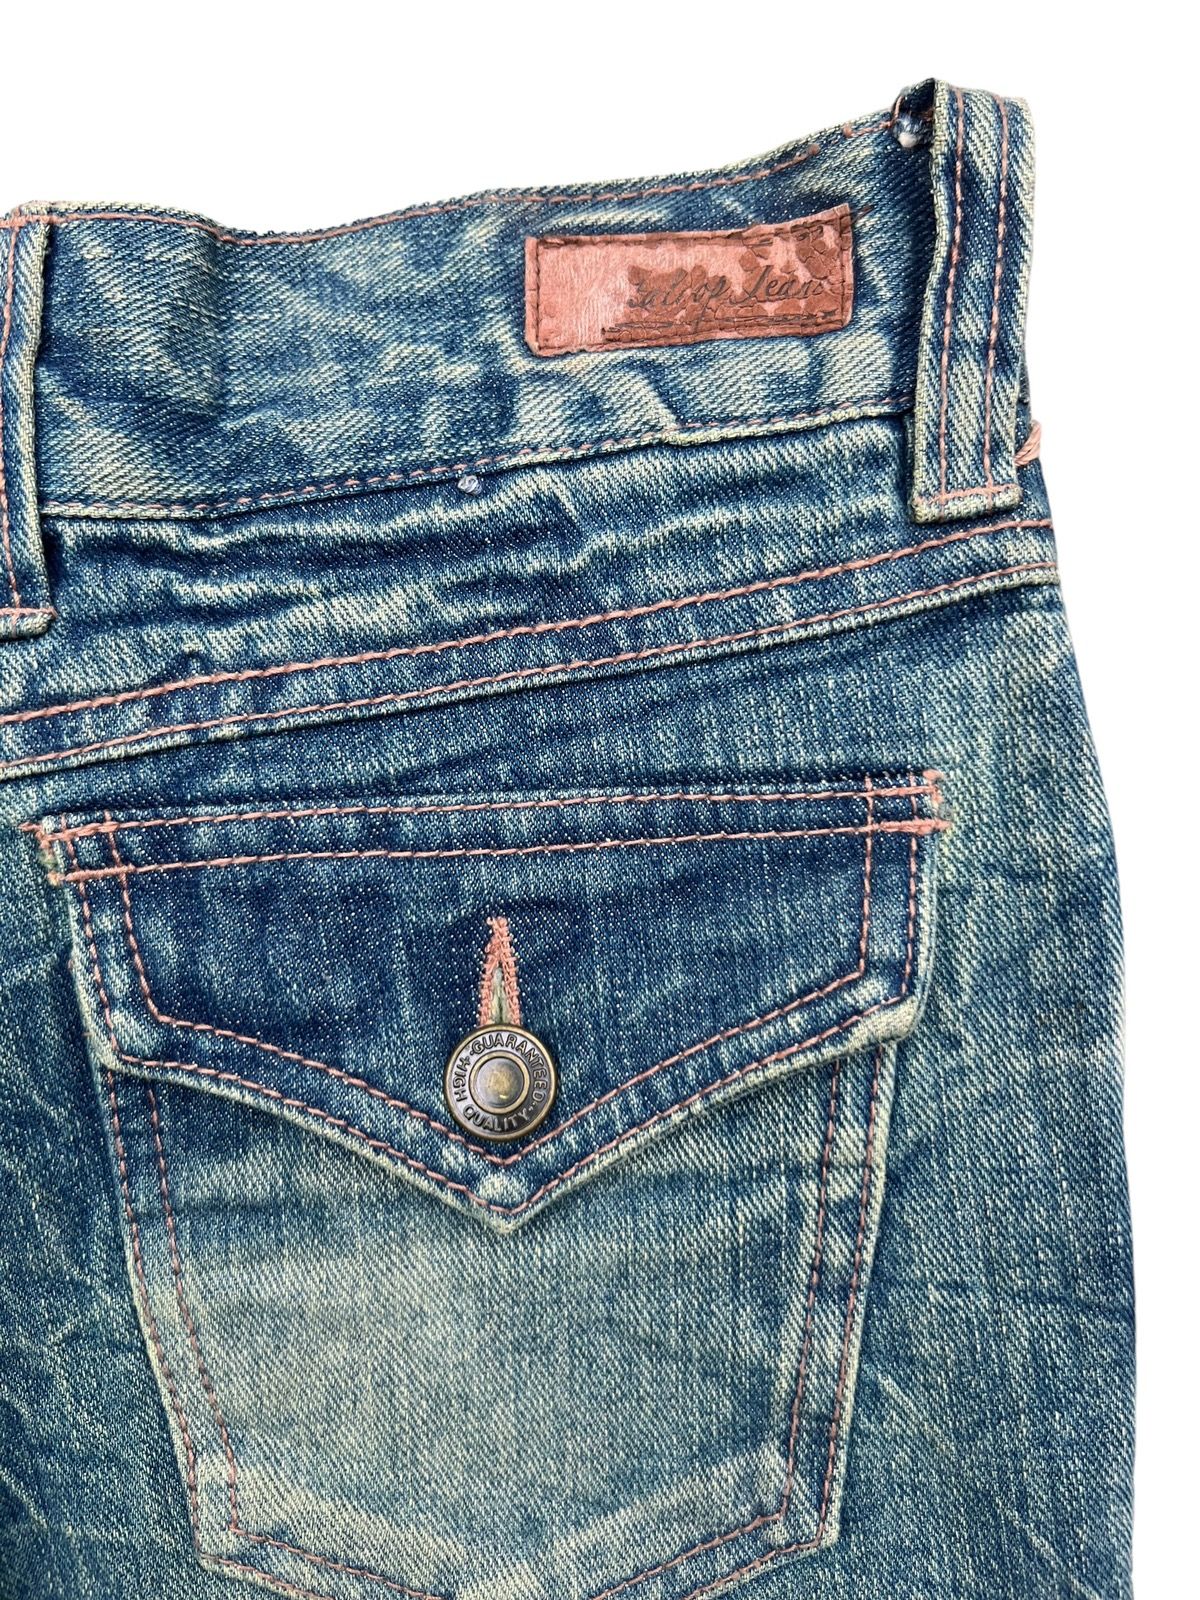 Hype - Japanese Brand Distressed Mudwash Flare Denim Jeans 28x30.5 - 7